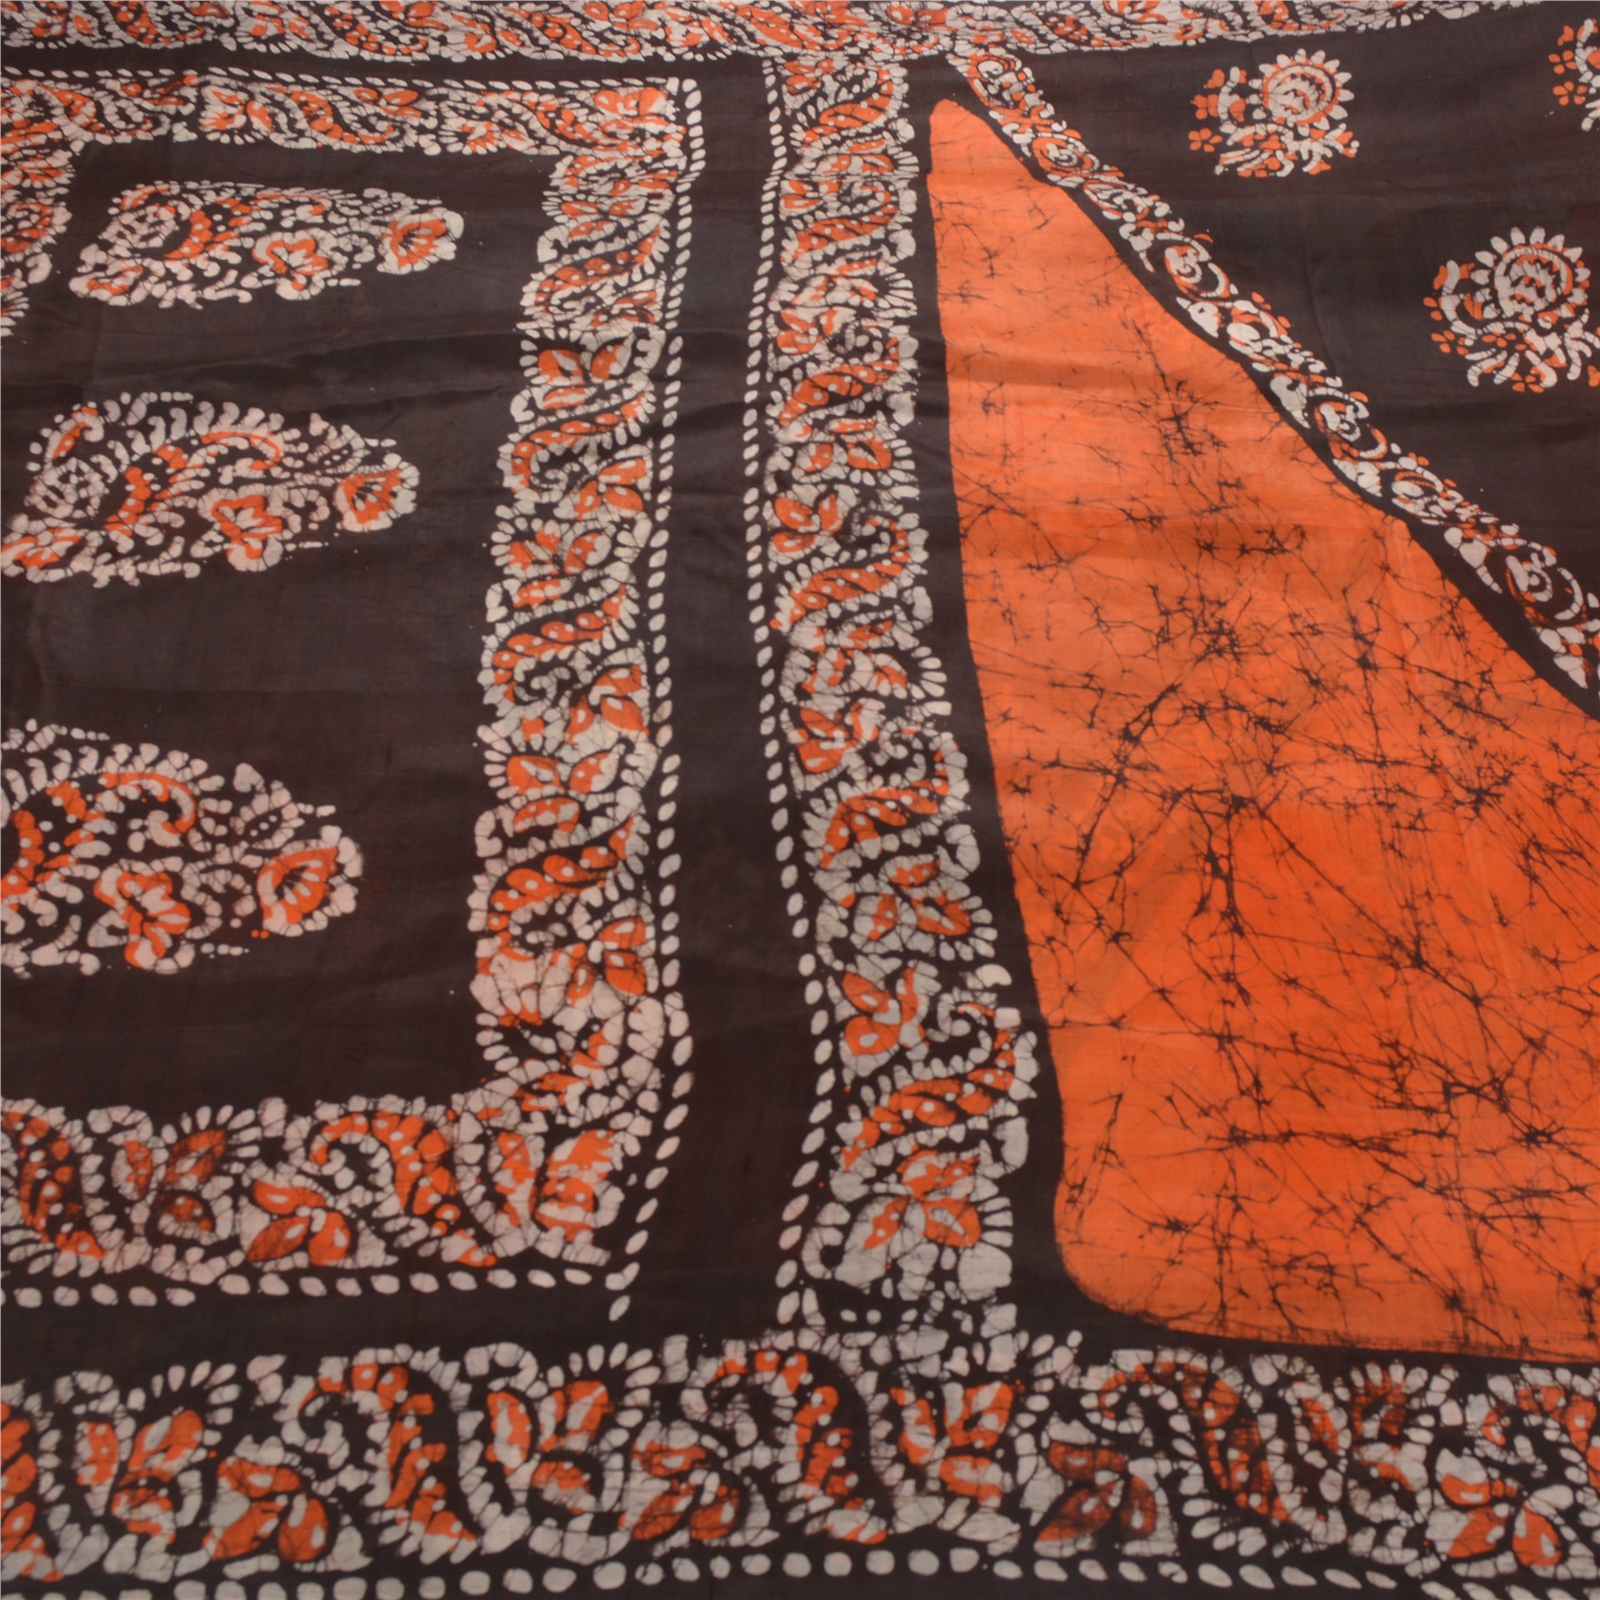 Vintage Sari 100/% Pure Silk Orange Sarees Printed Indian 6 yard Craft Fabric